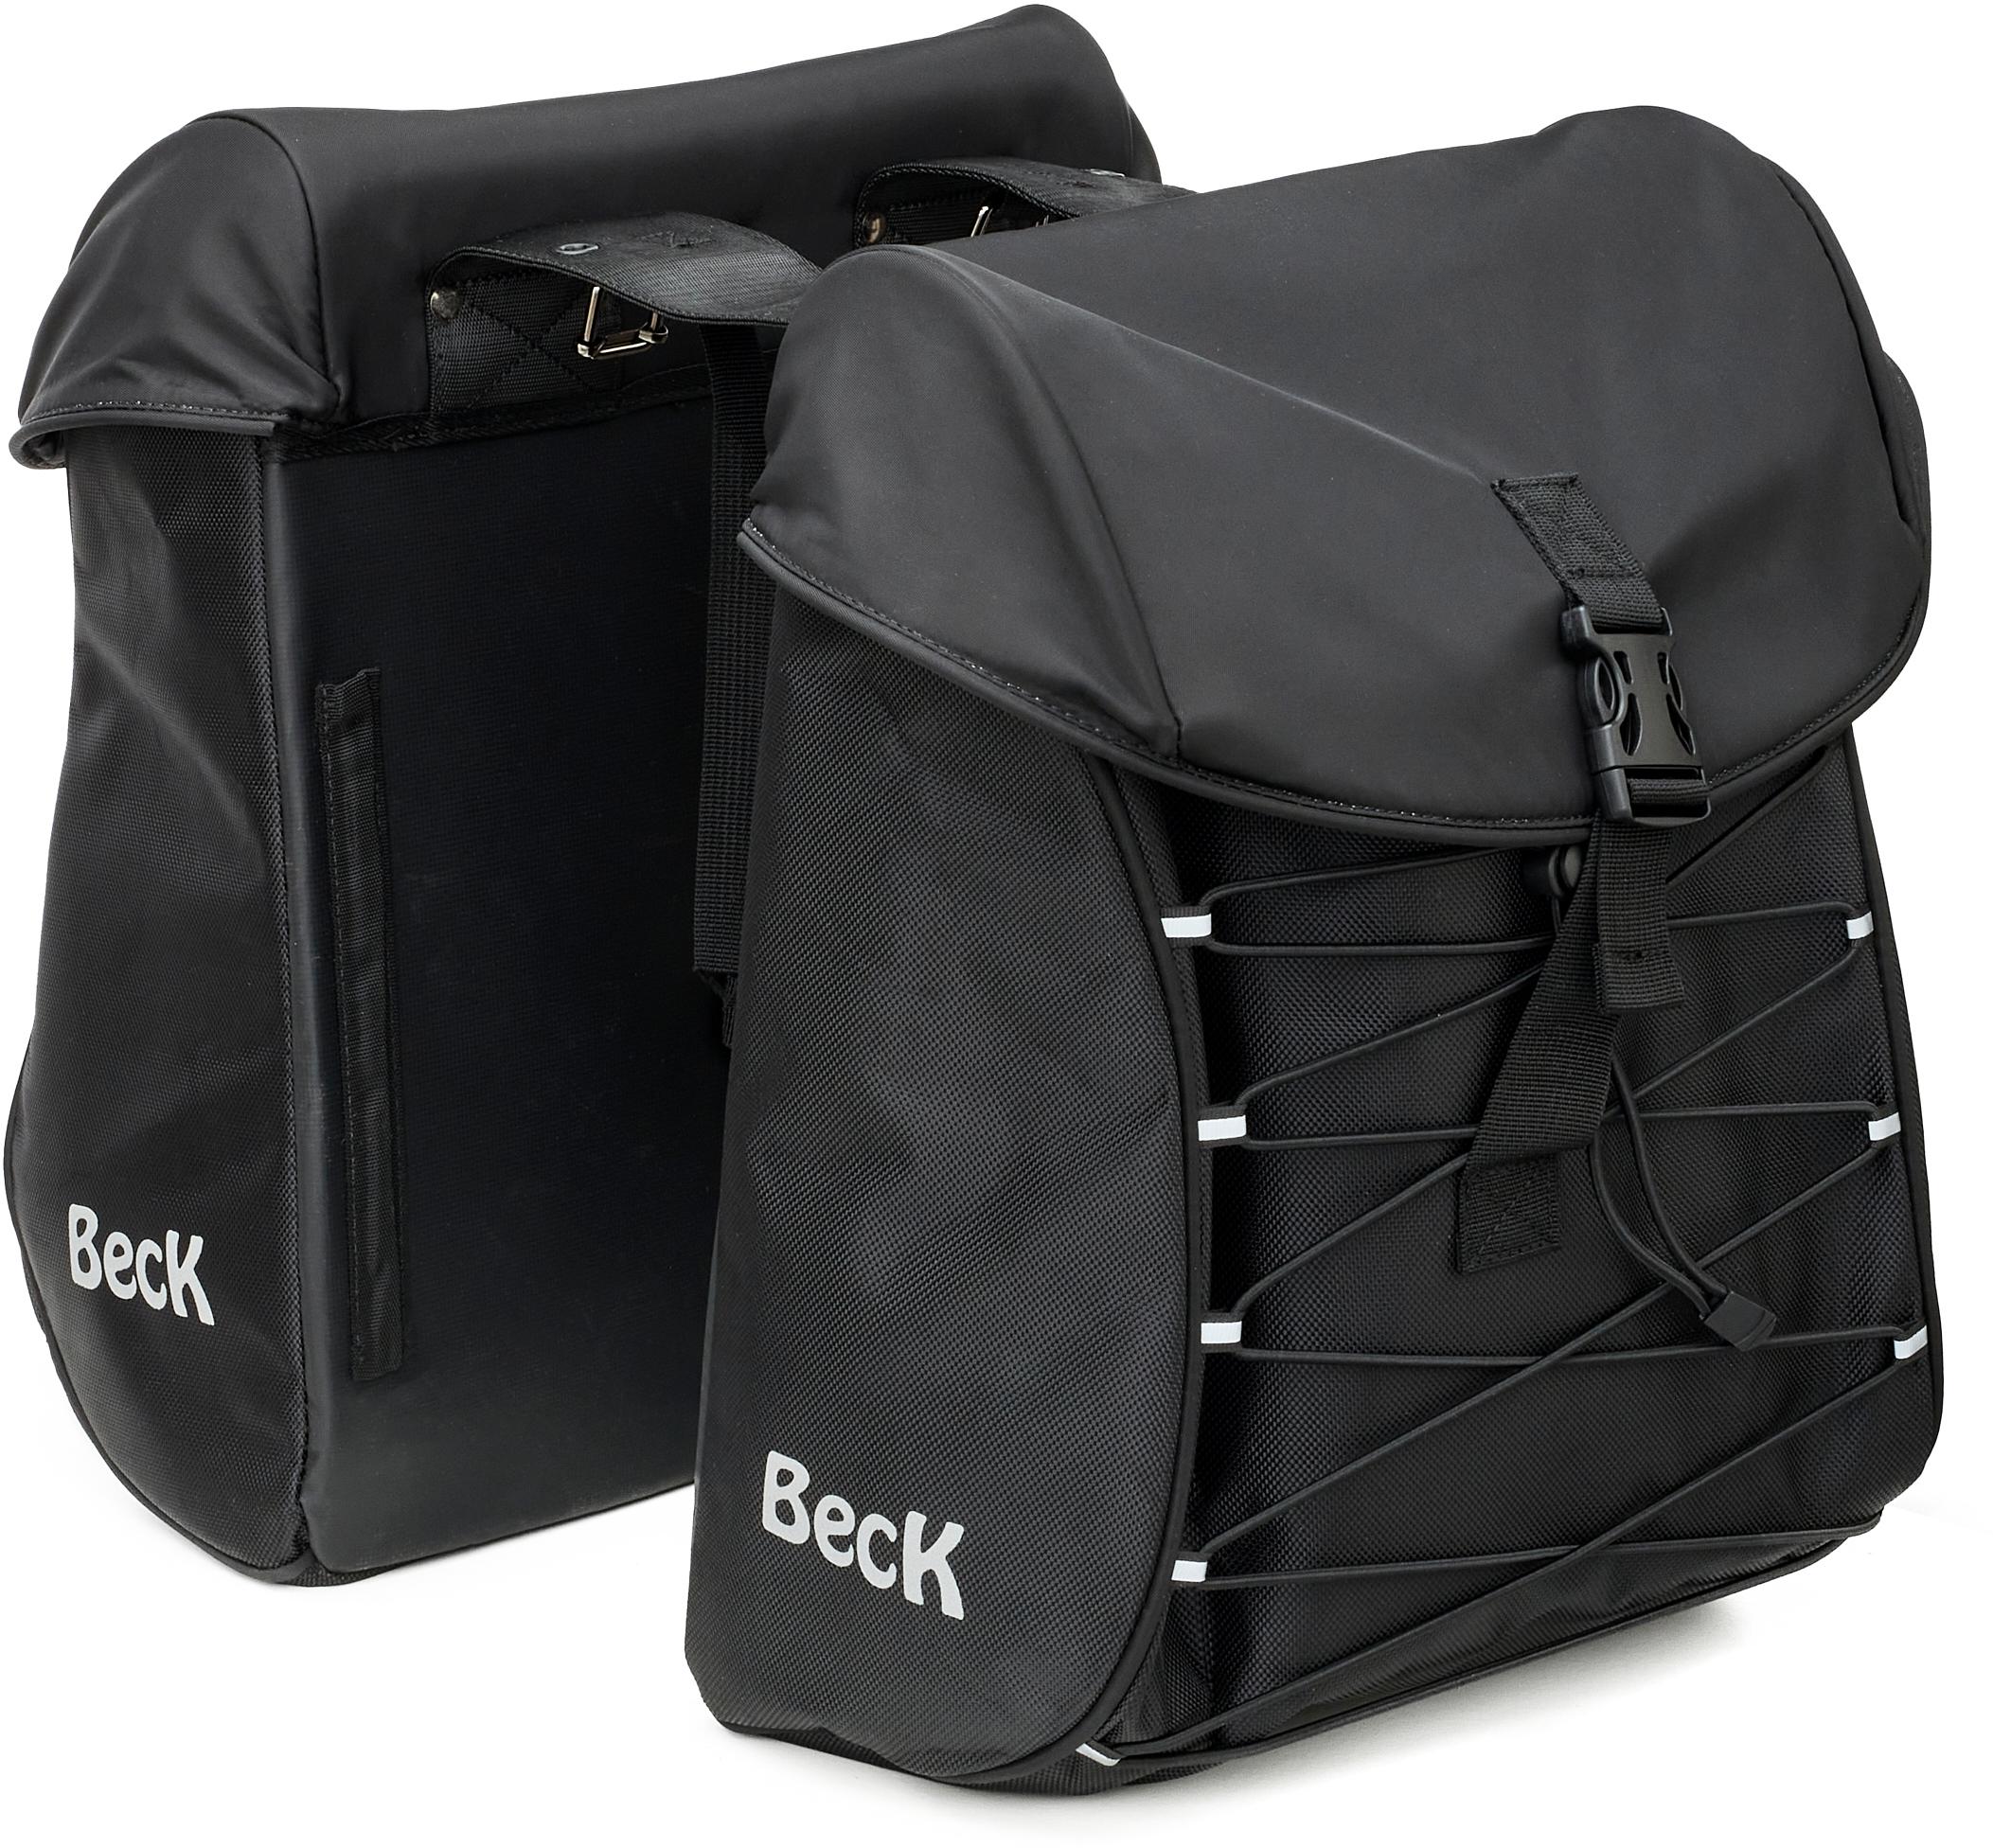 Beck S.Tar Double Pannier Bag Black